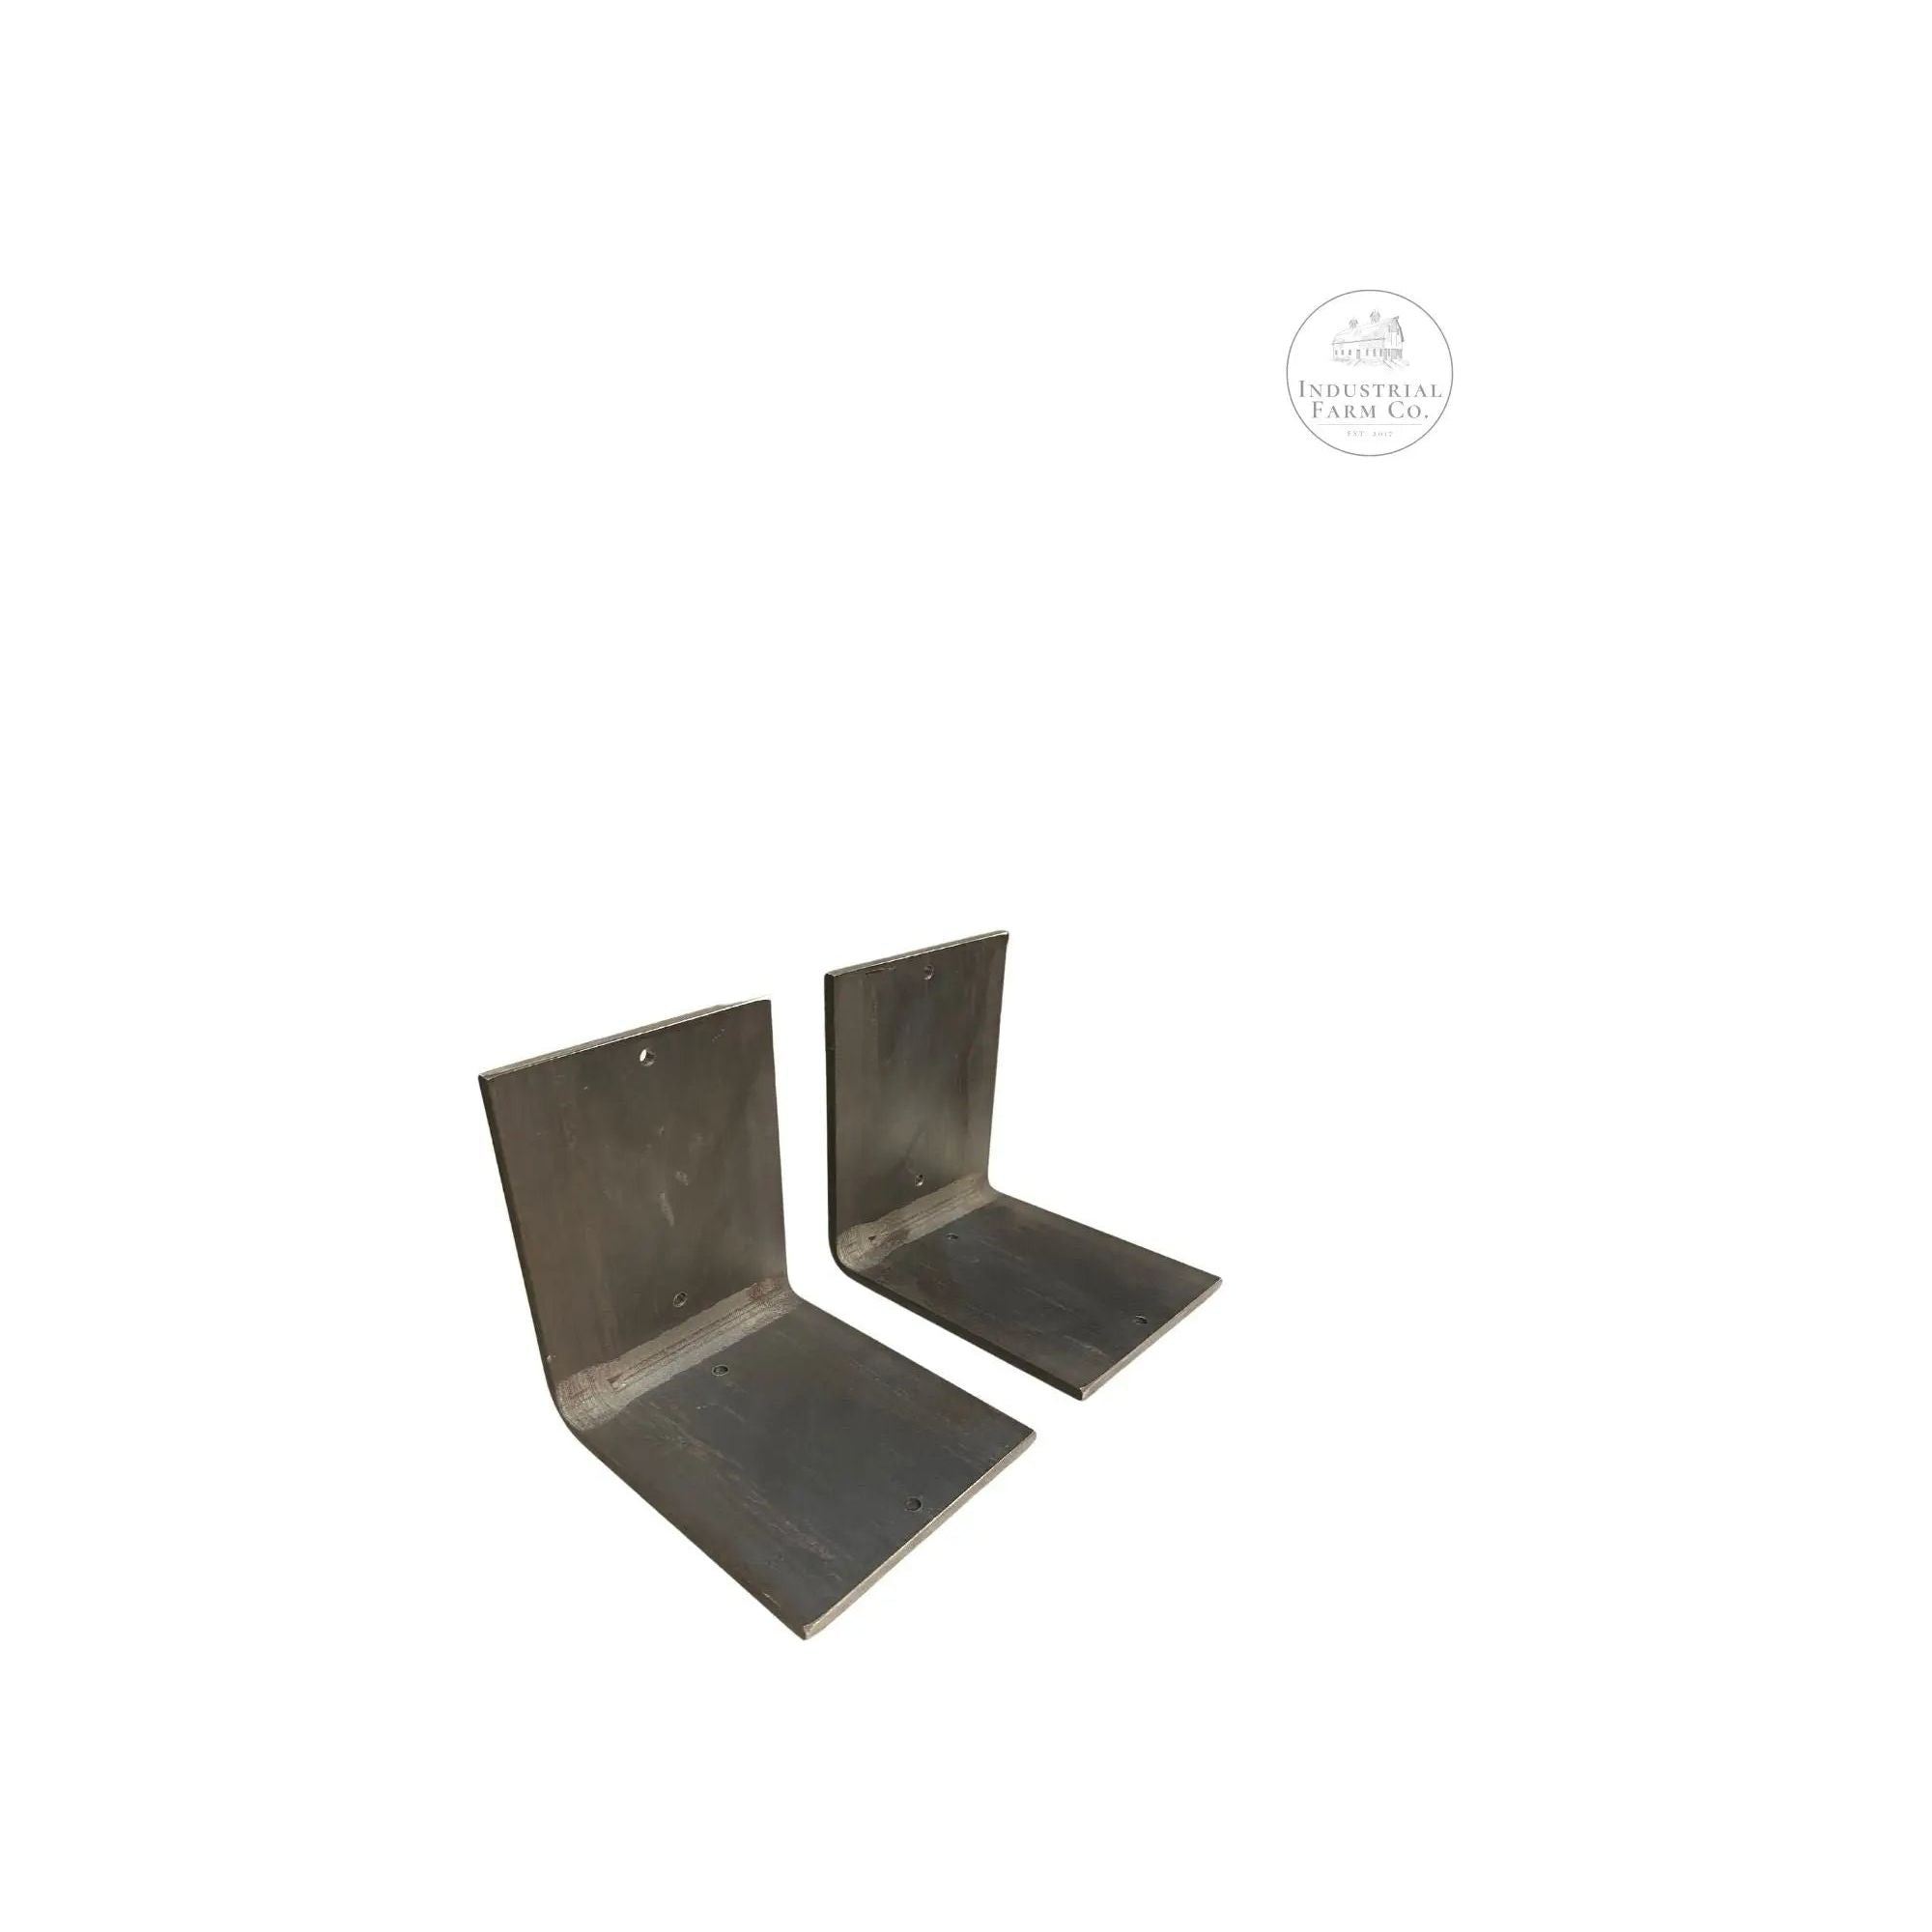 The Lyons Style L Shelf Bracket Shelf Support 4" Depth x 4" Wall Mount Length Finish Raw - Uncoated Metal | Industrial Farm Co